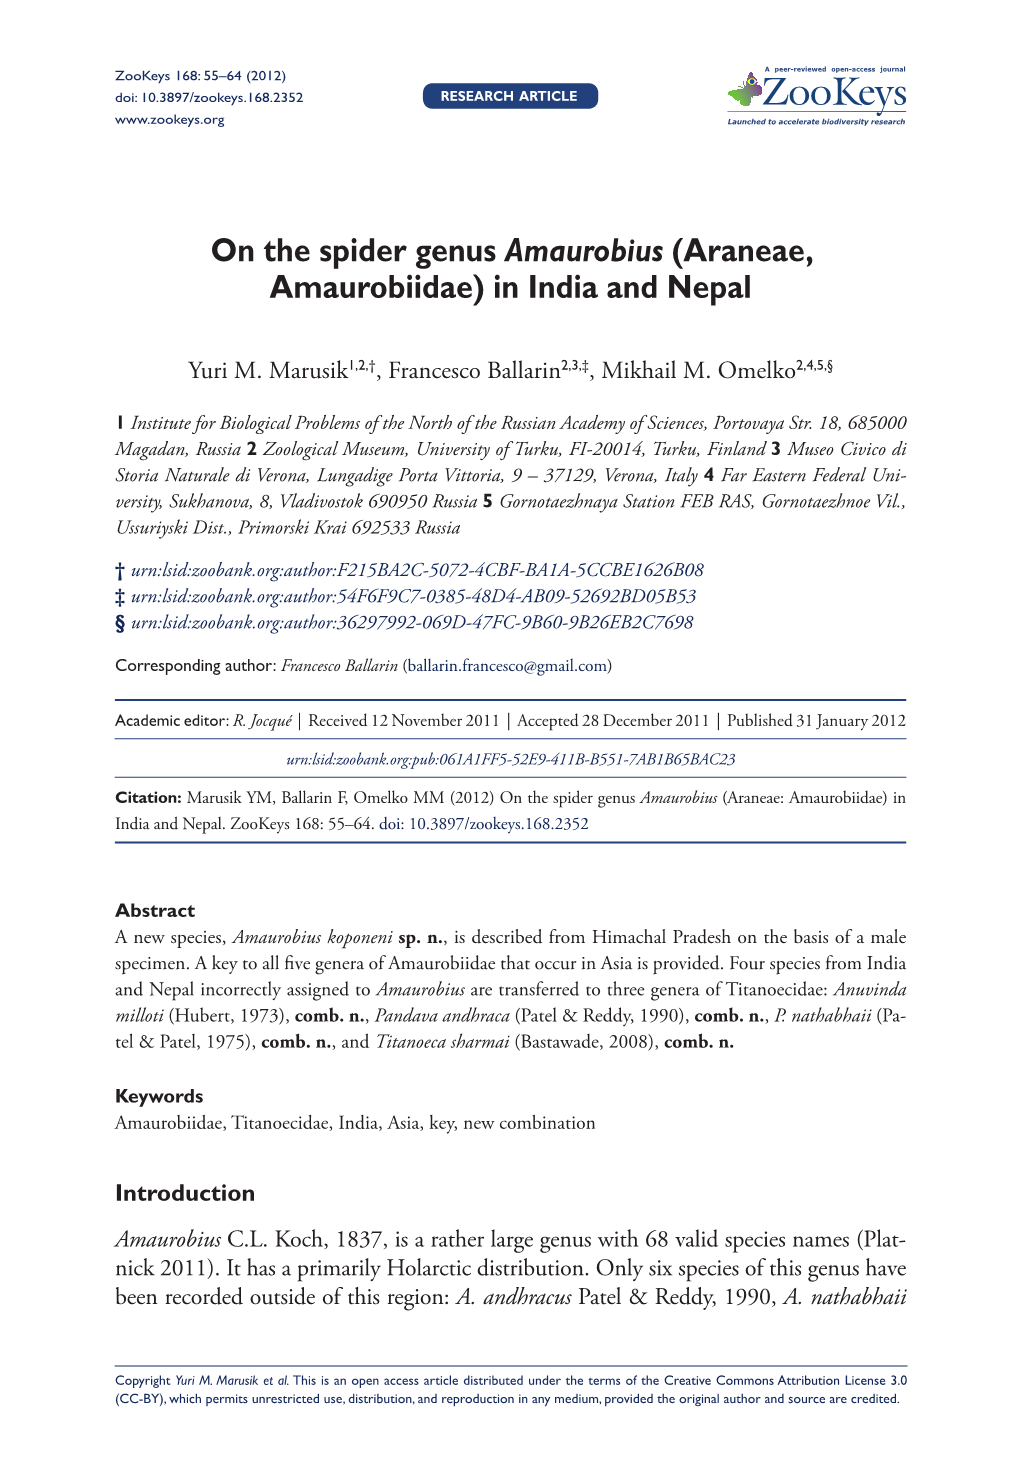 On the Spider Genus Amaurobius (Araneae, Amaurobiidae) in India and Nepal